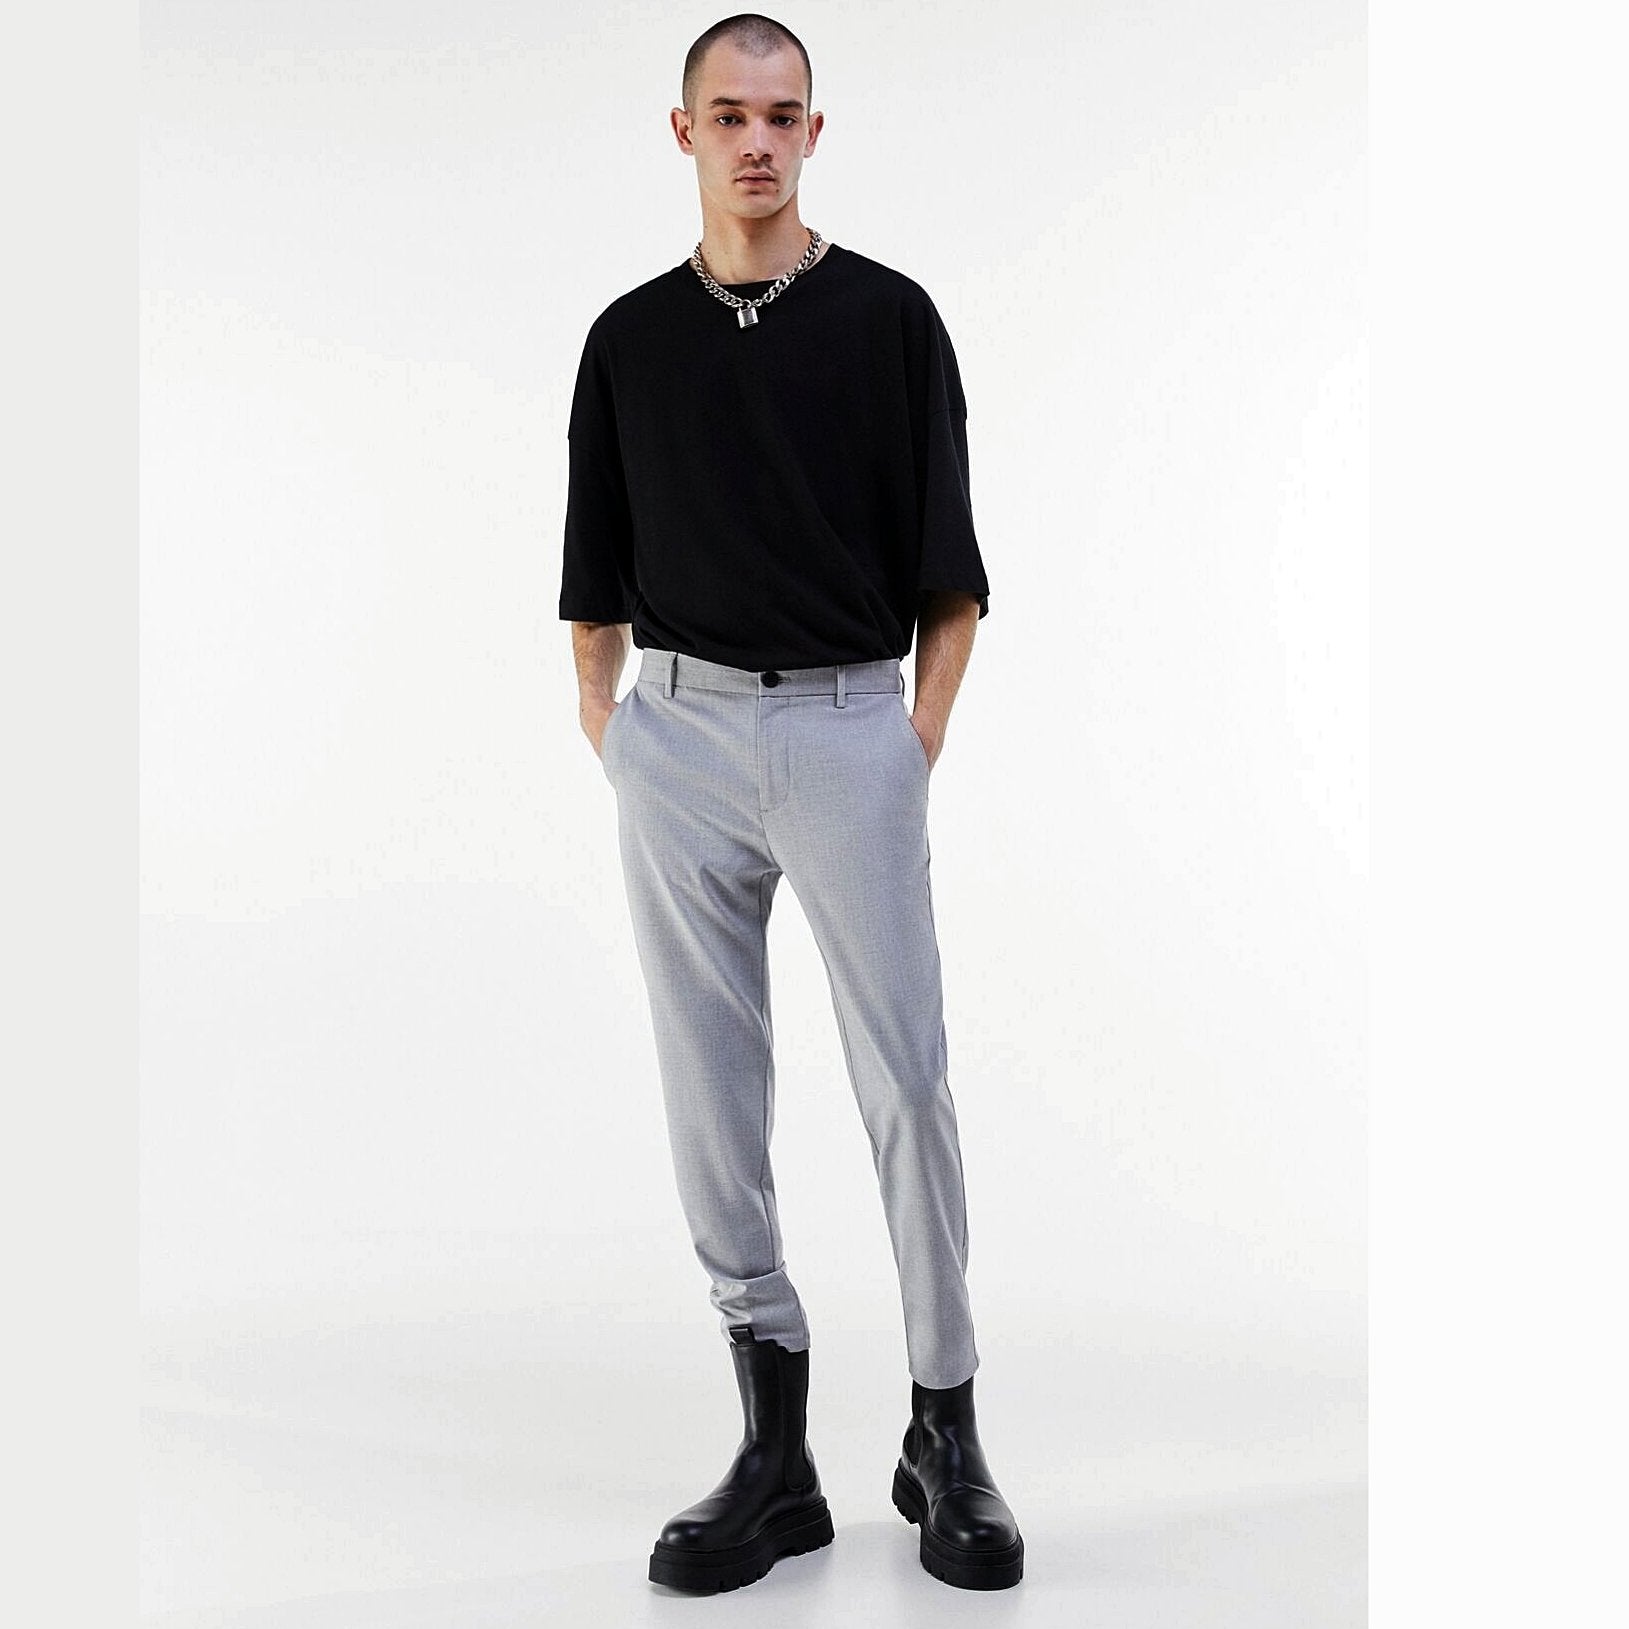 Genuine BR grey formal pant